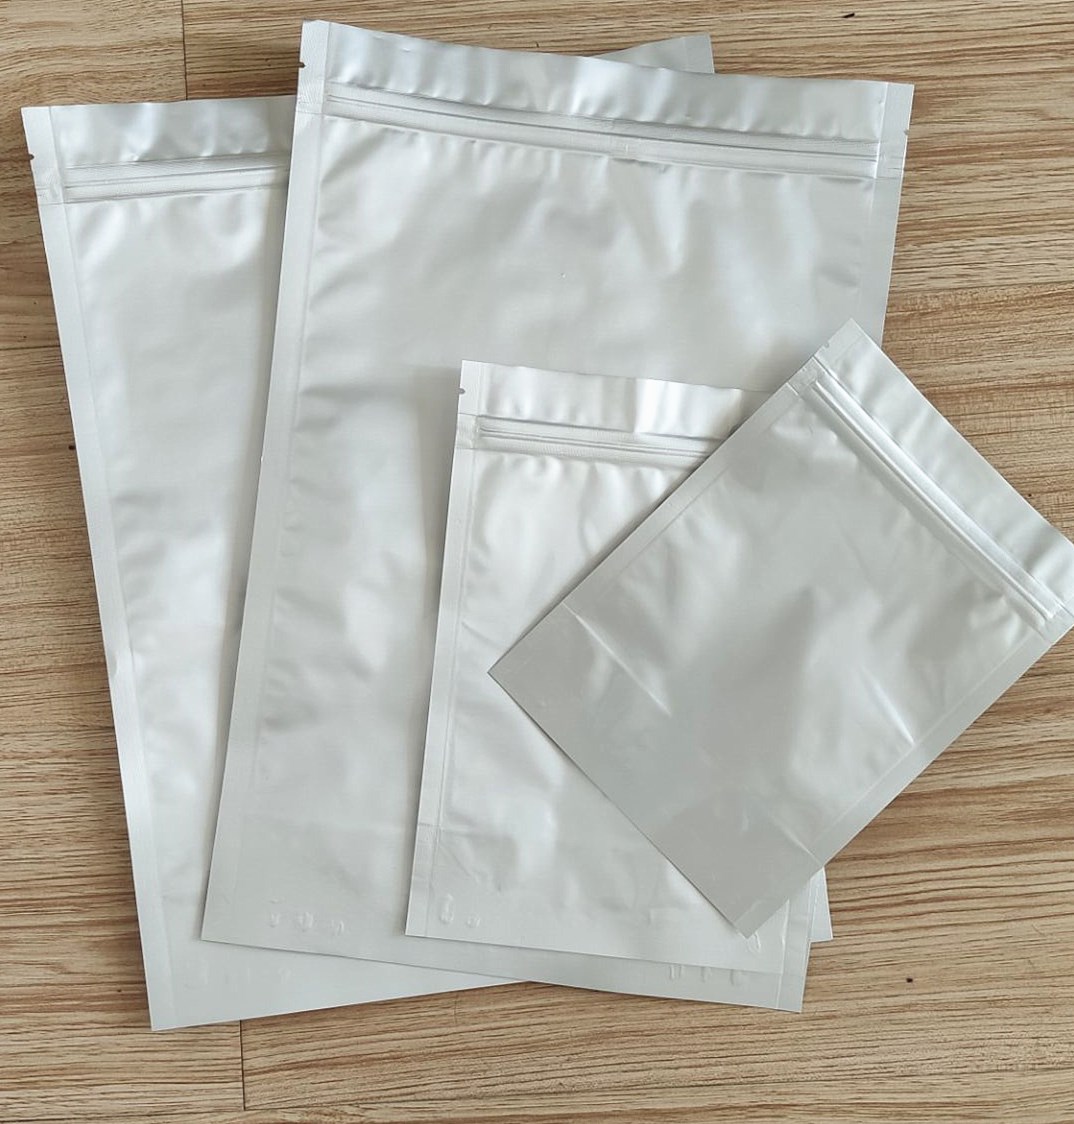 Manufacture High quality Customized Aluminum Foil Bags 